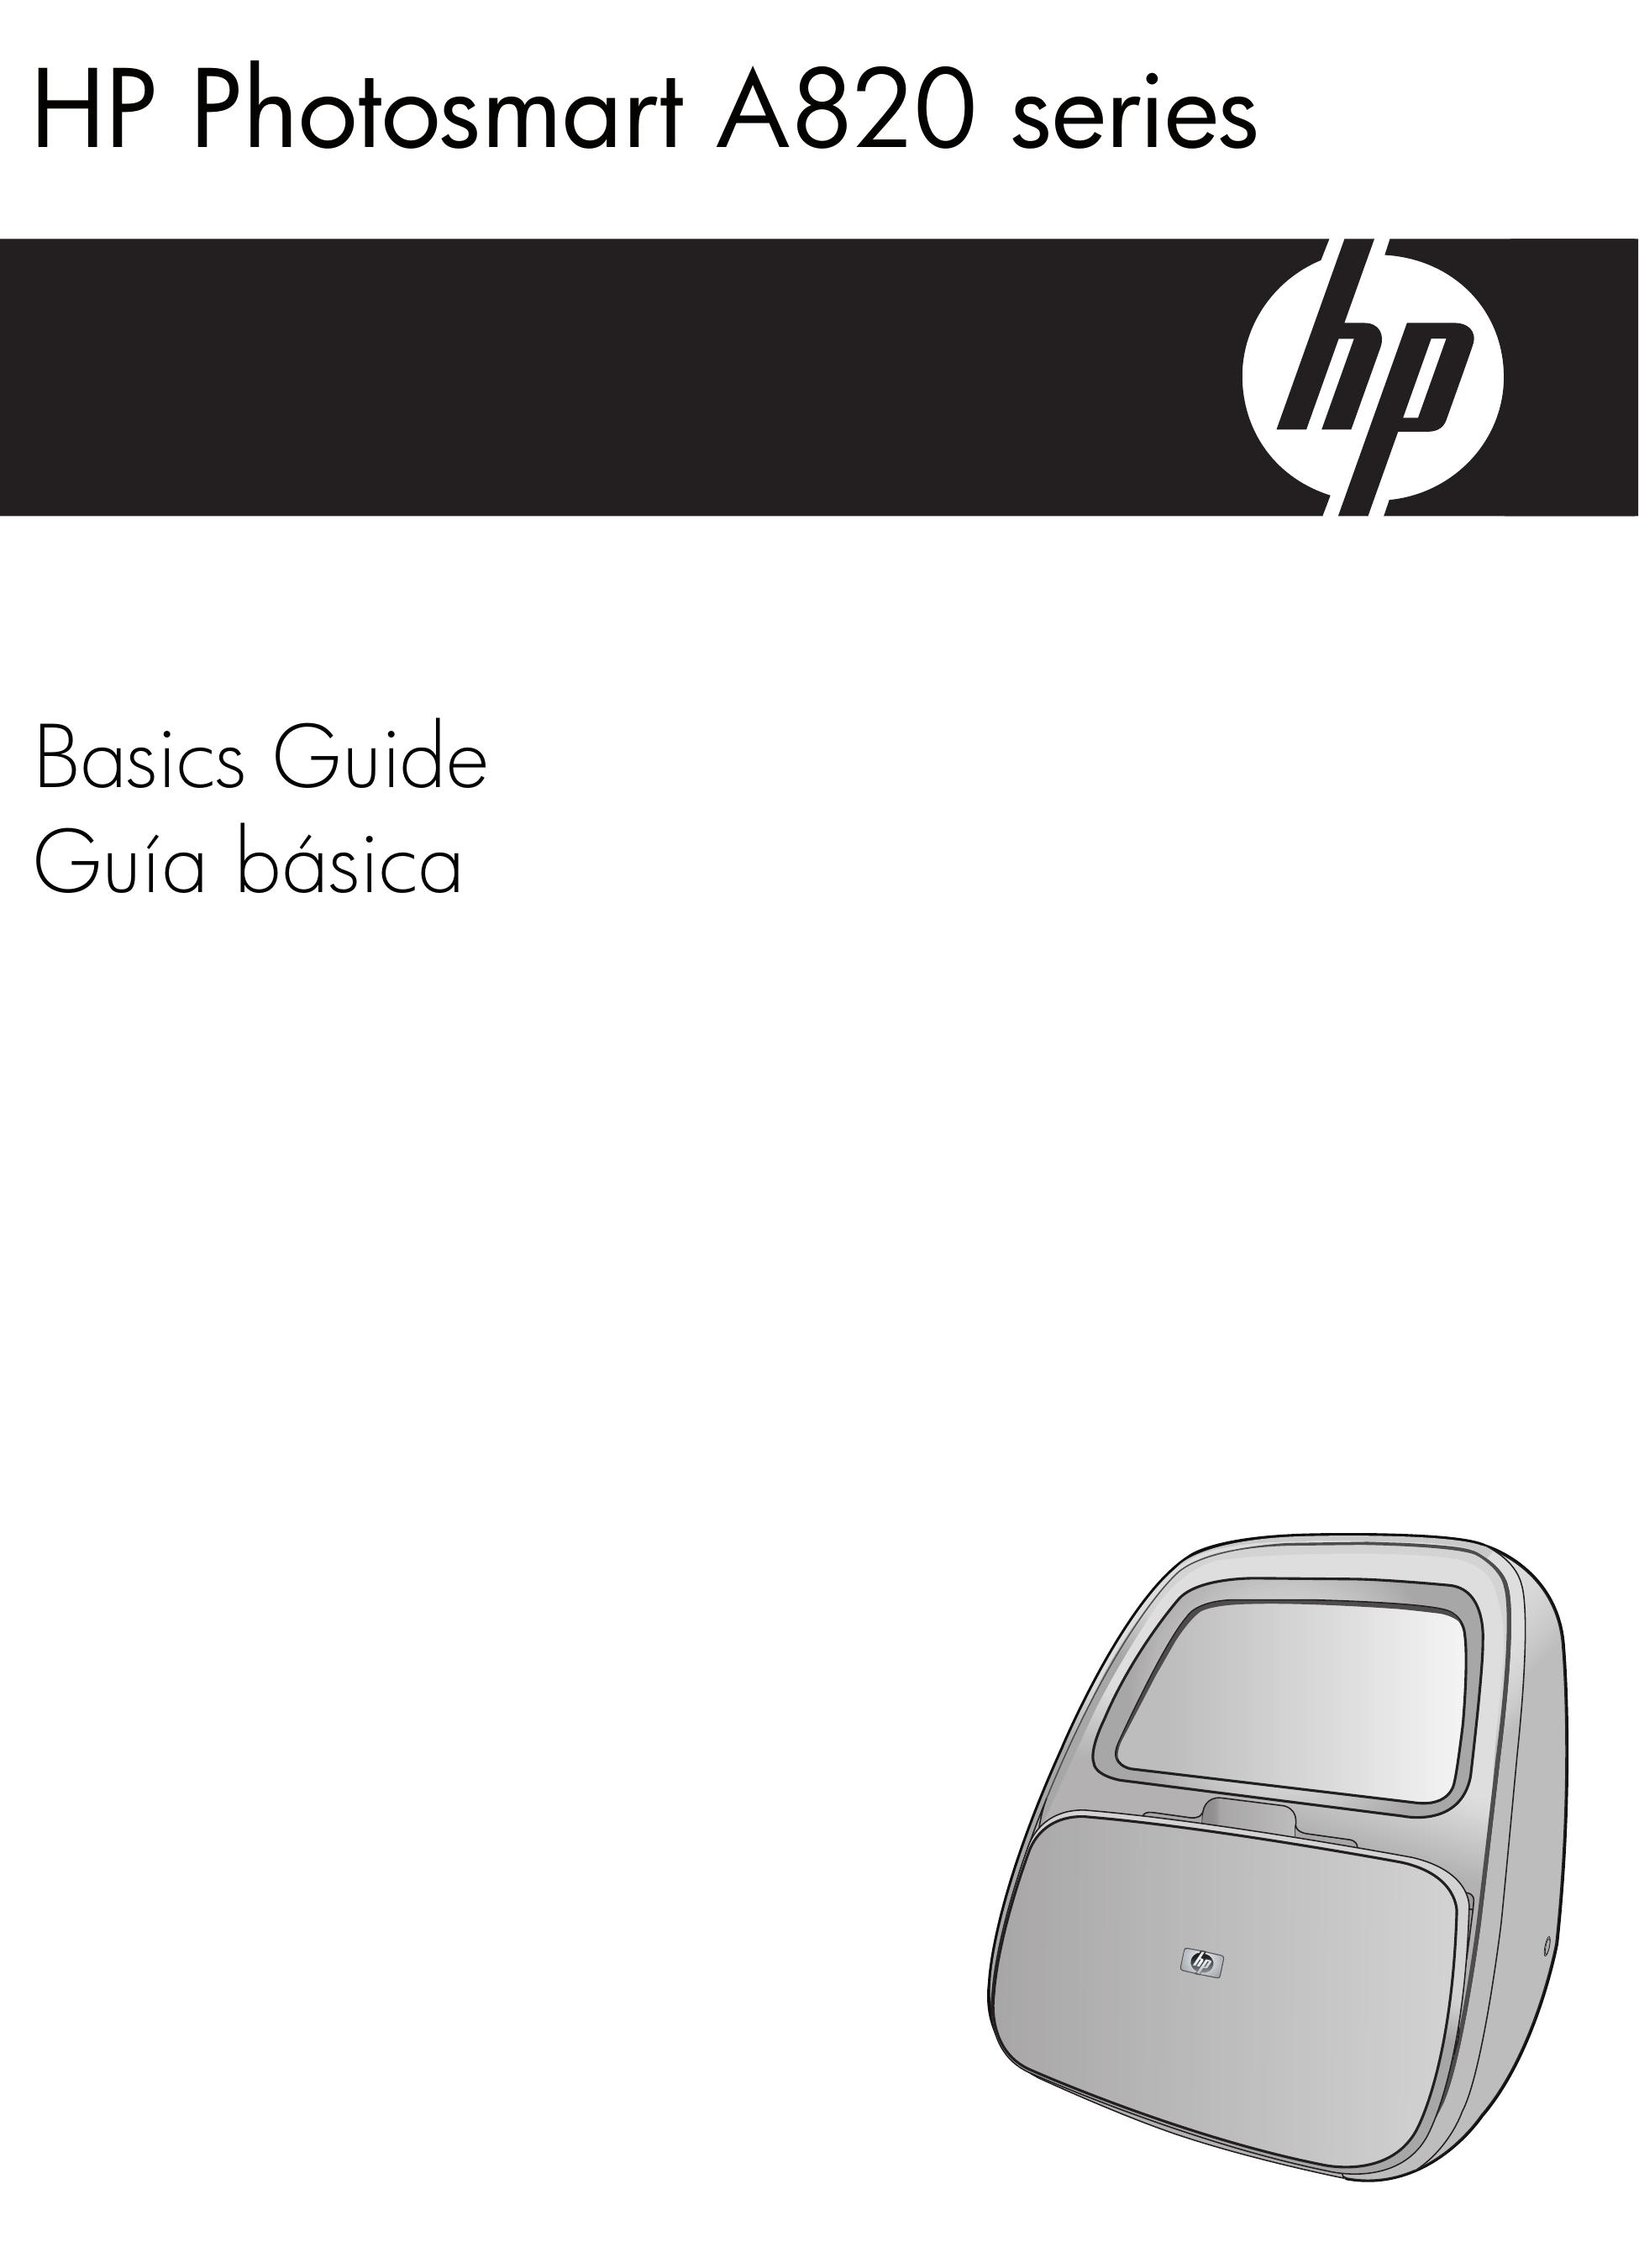 HP (Hewlett-Packard) A820 series Photo Printer User Manual